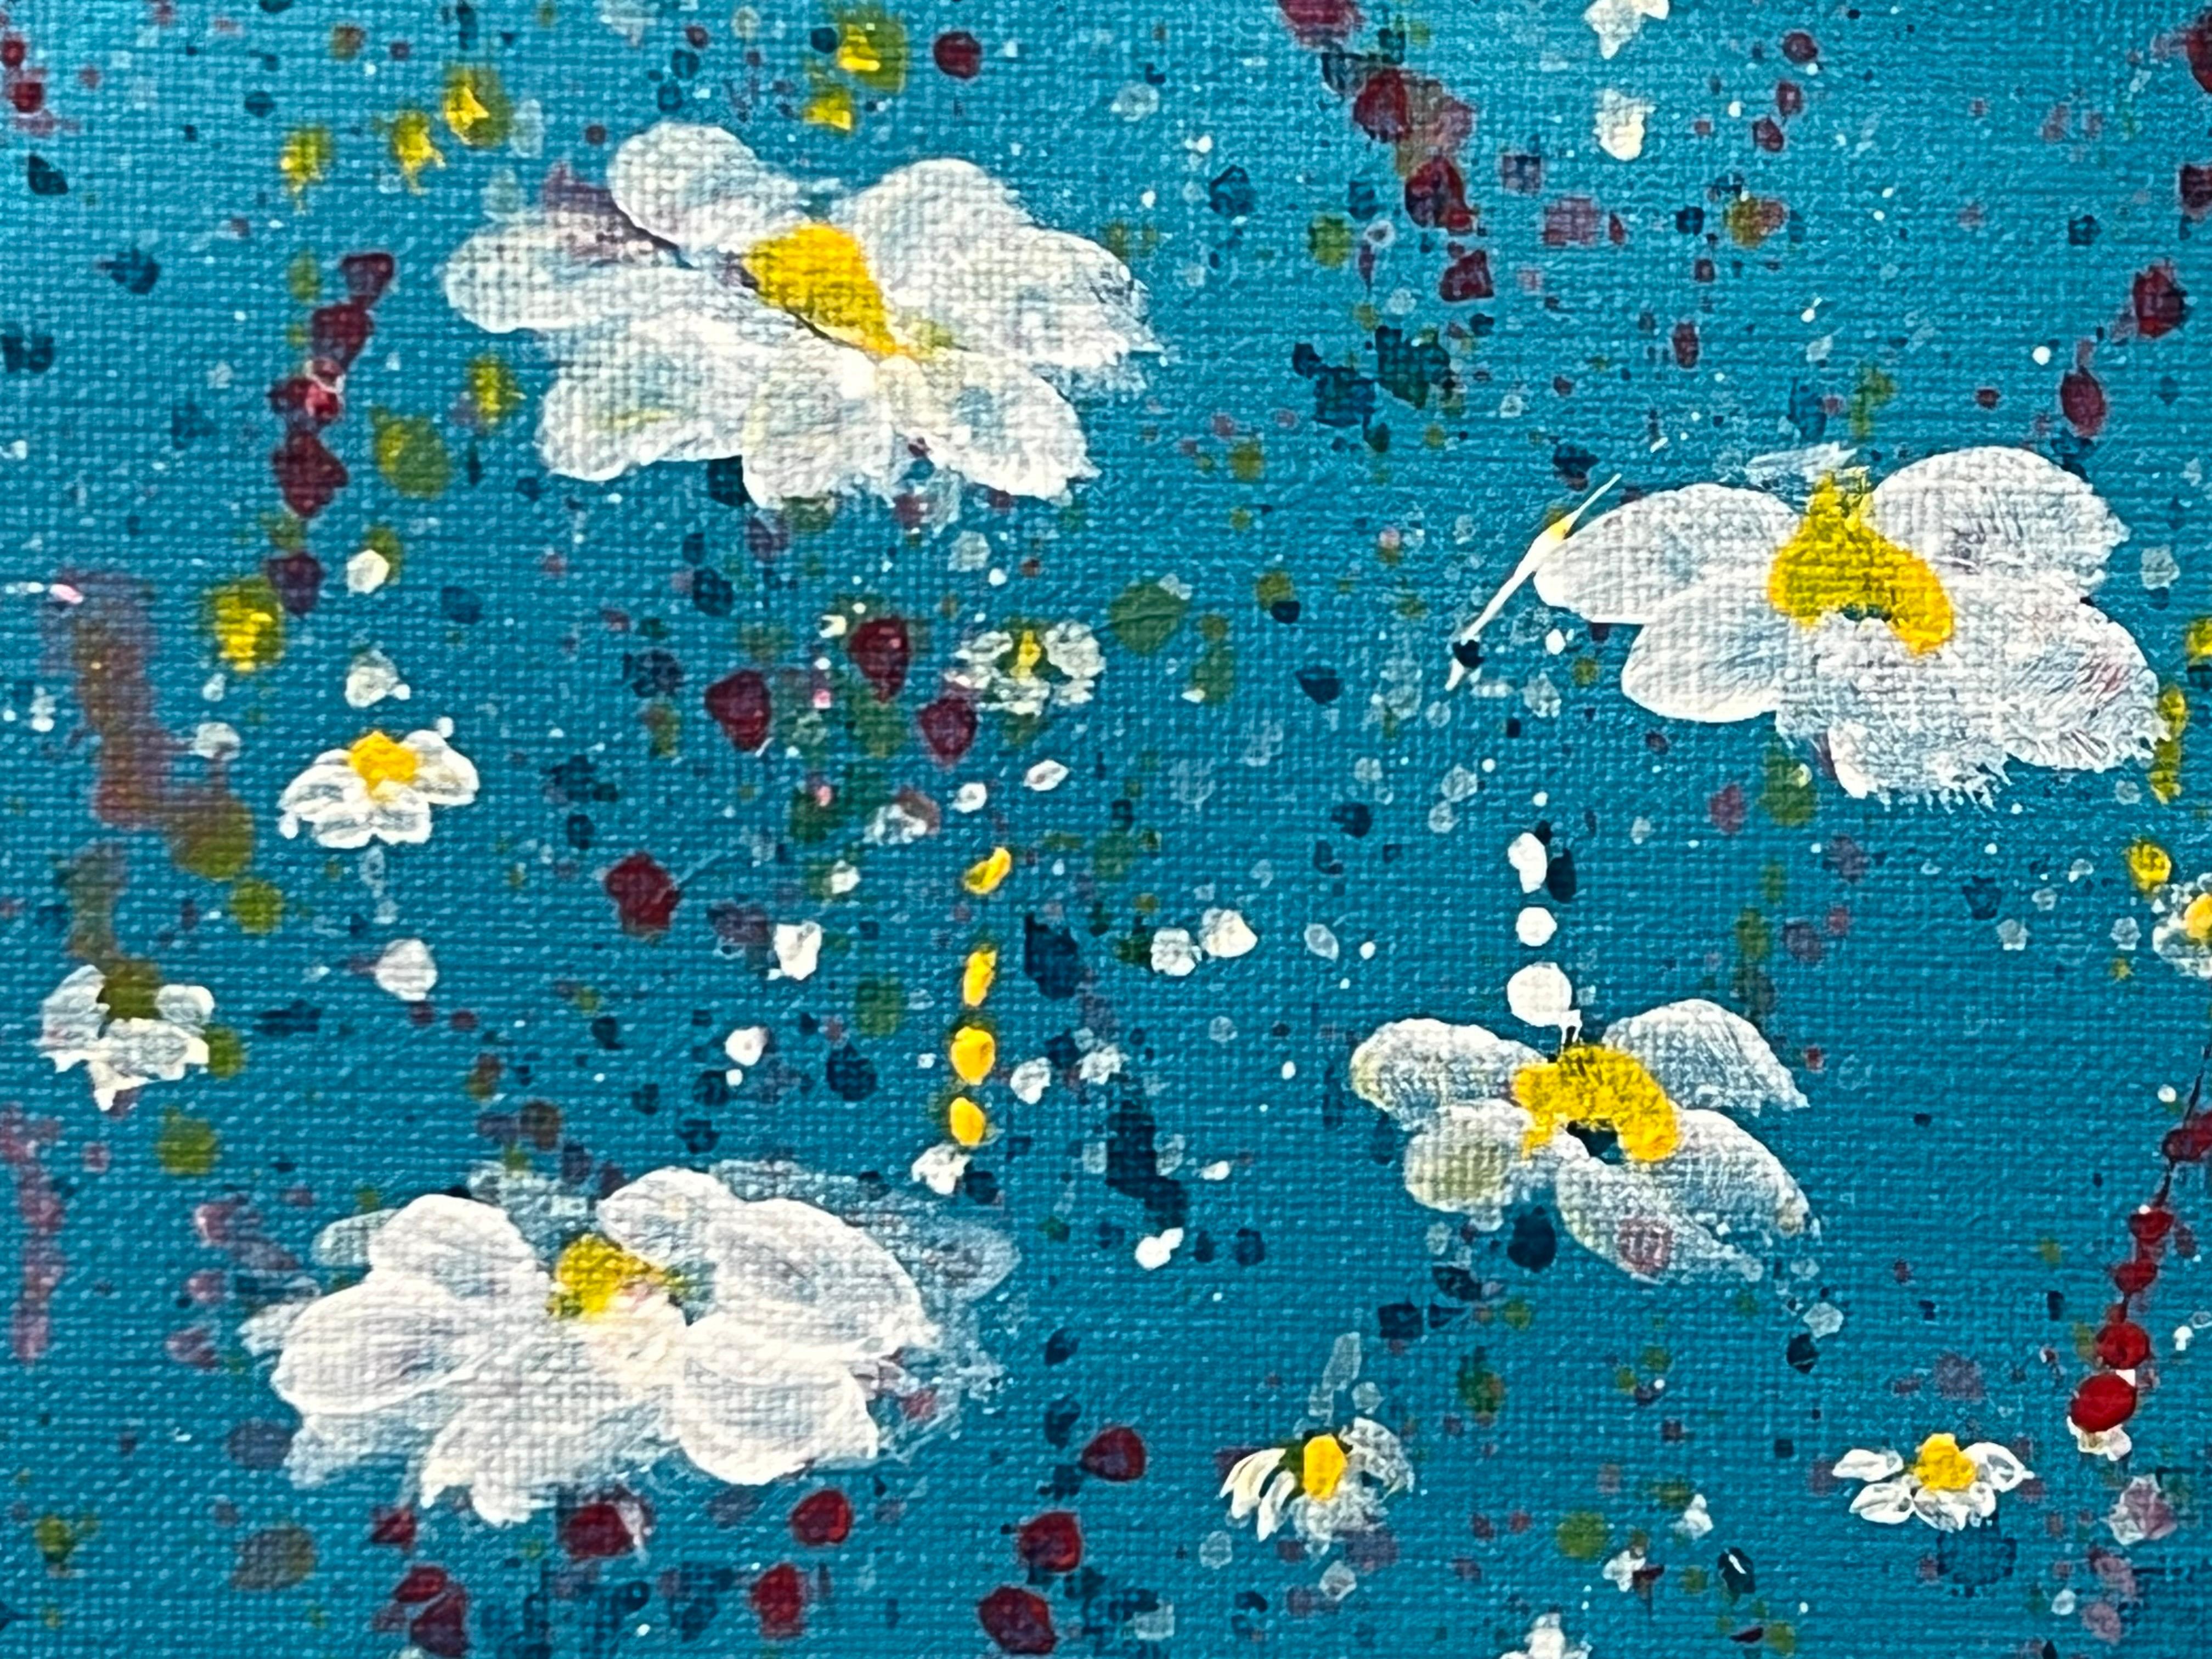 Flores abstractas de margaritas blancas sobre fondo turquesa por Artista Contemporáneo en venta 11